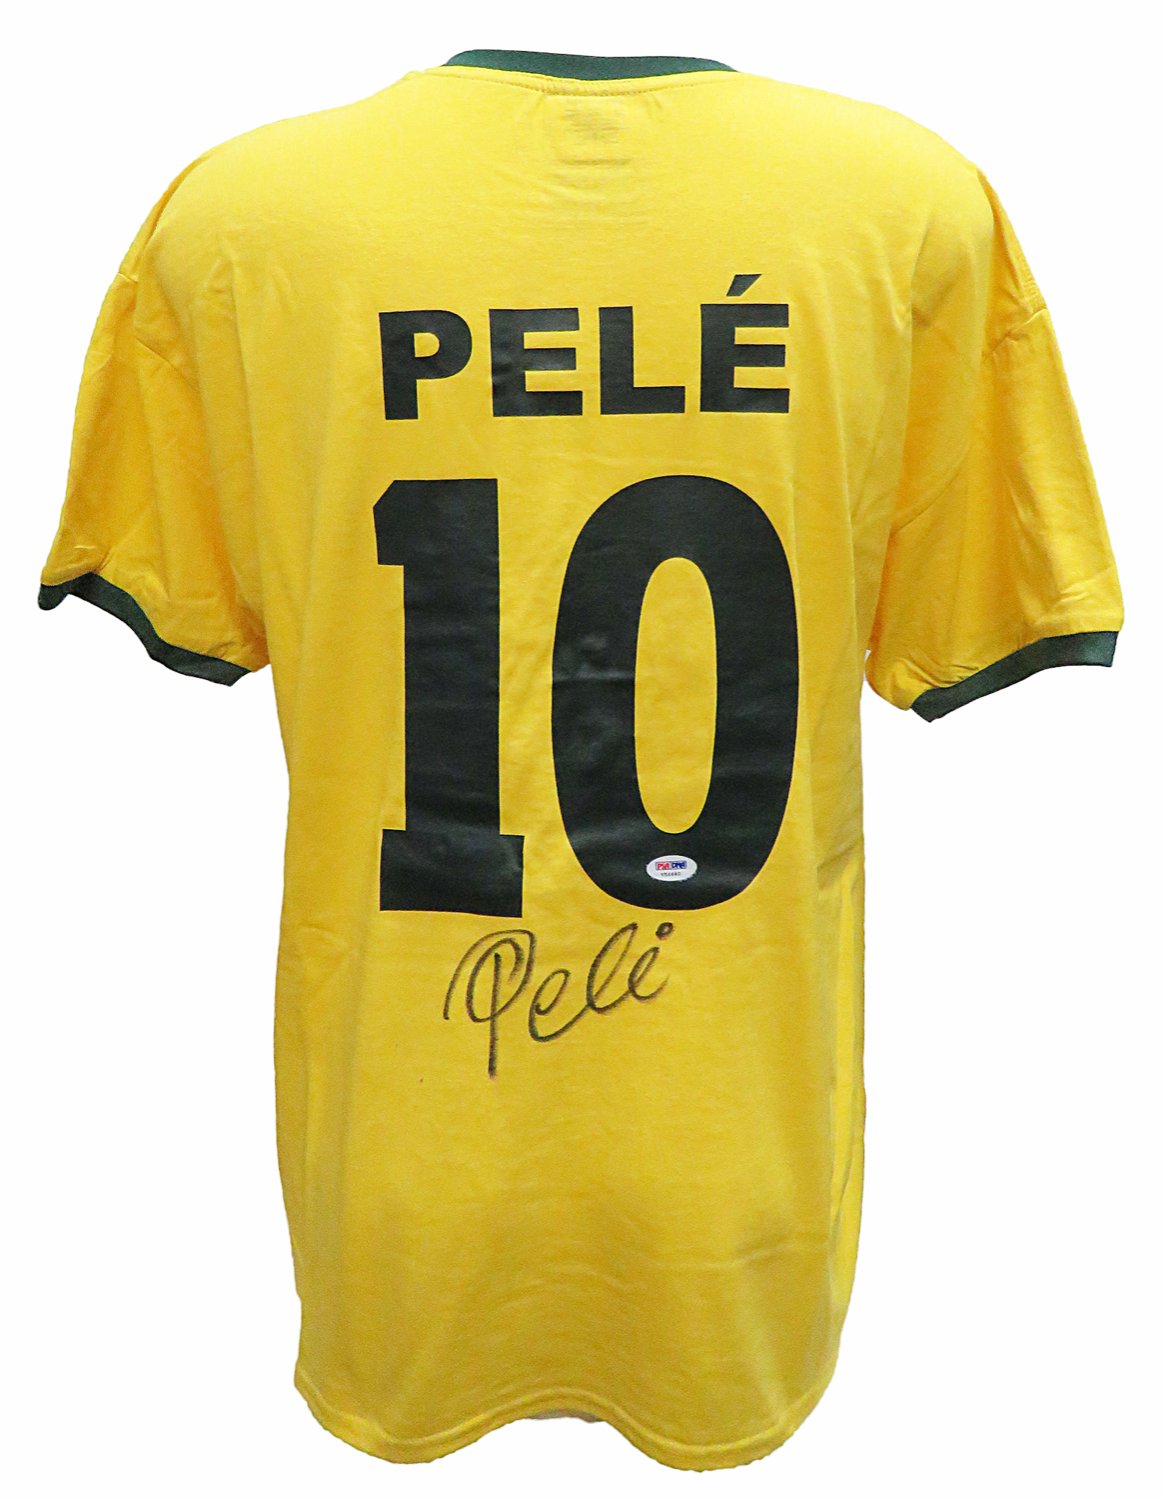 pele signed shirt price